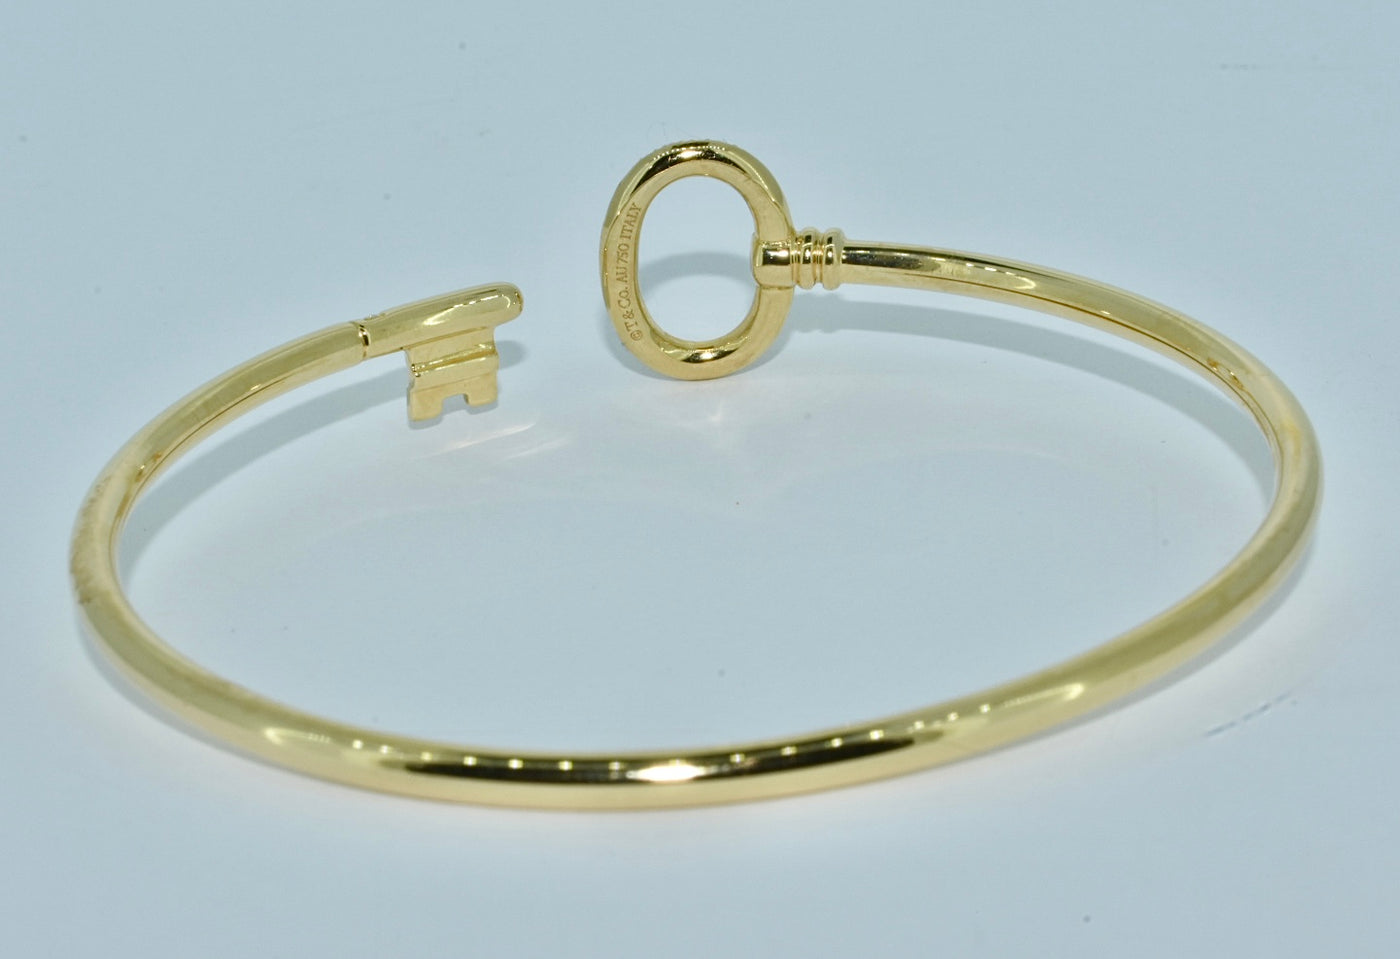 Tiffany & Co Key Diamond Bracelet 18k